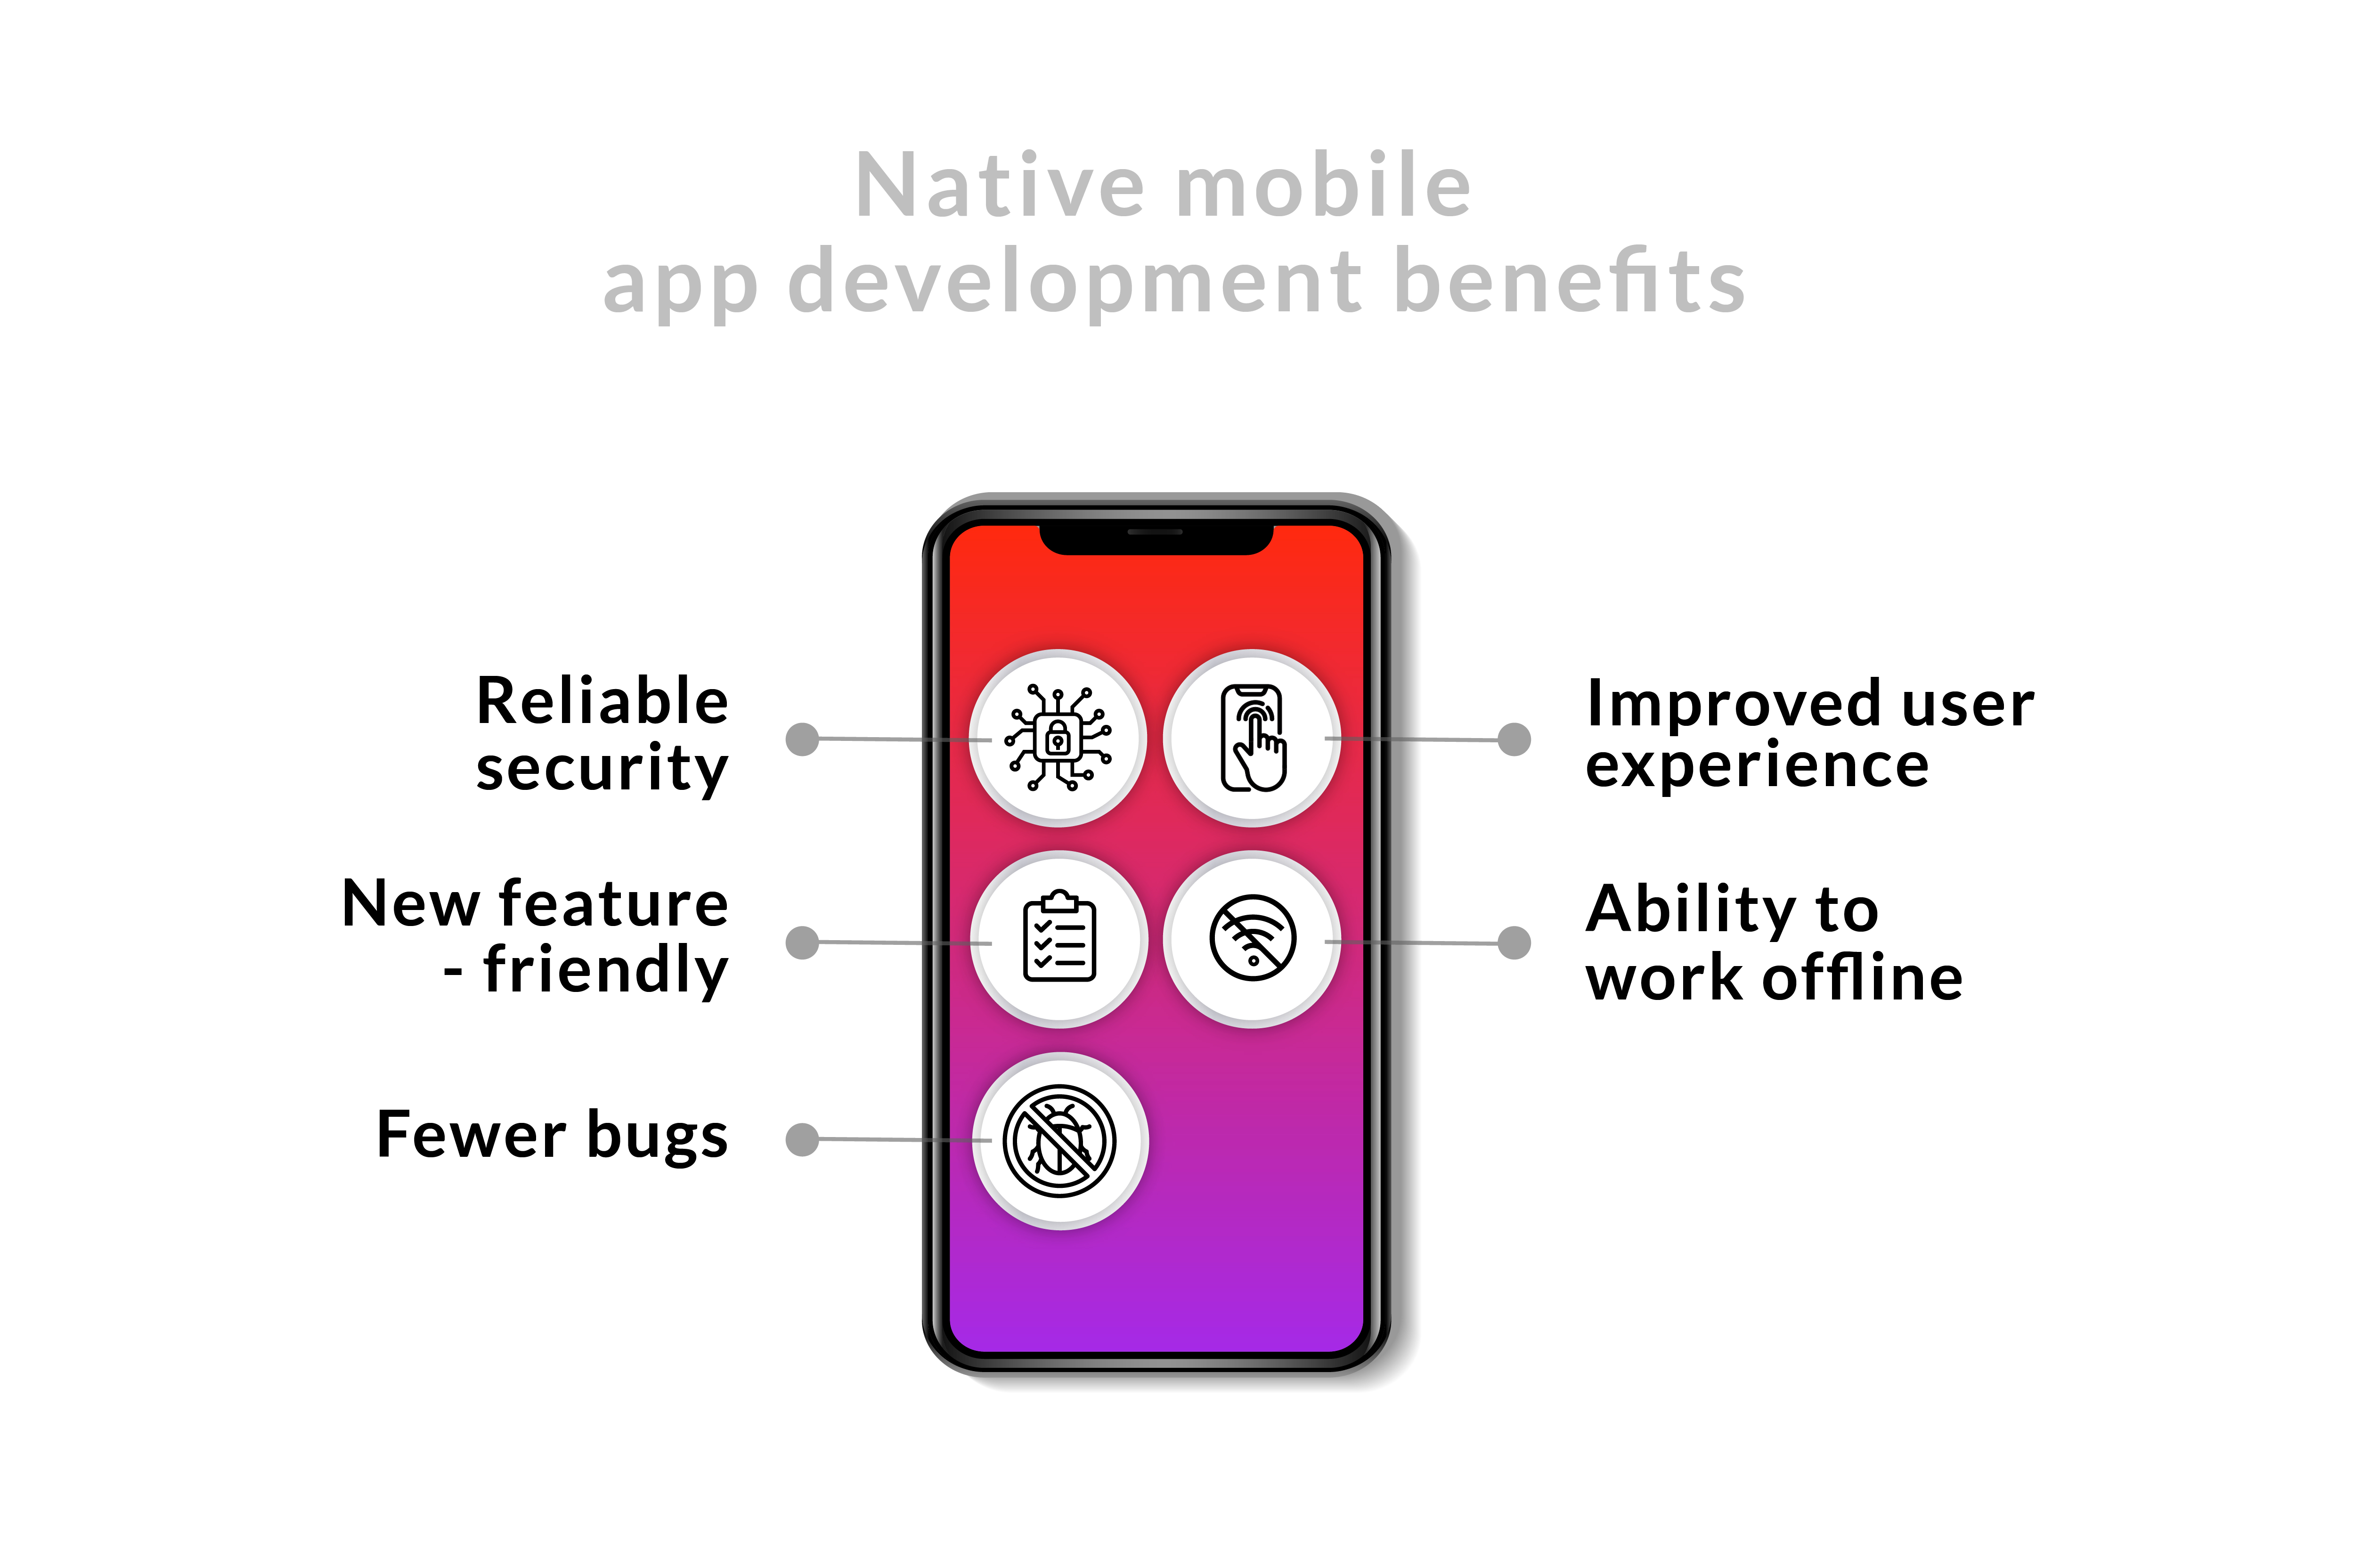 Native mobile app development benefits